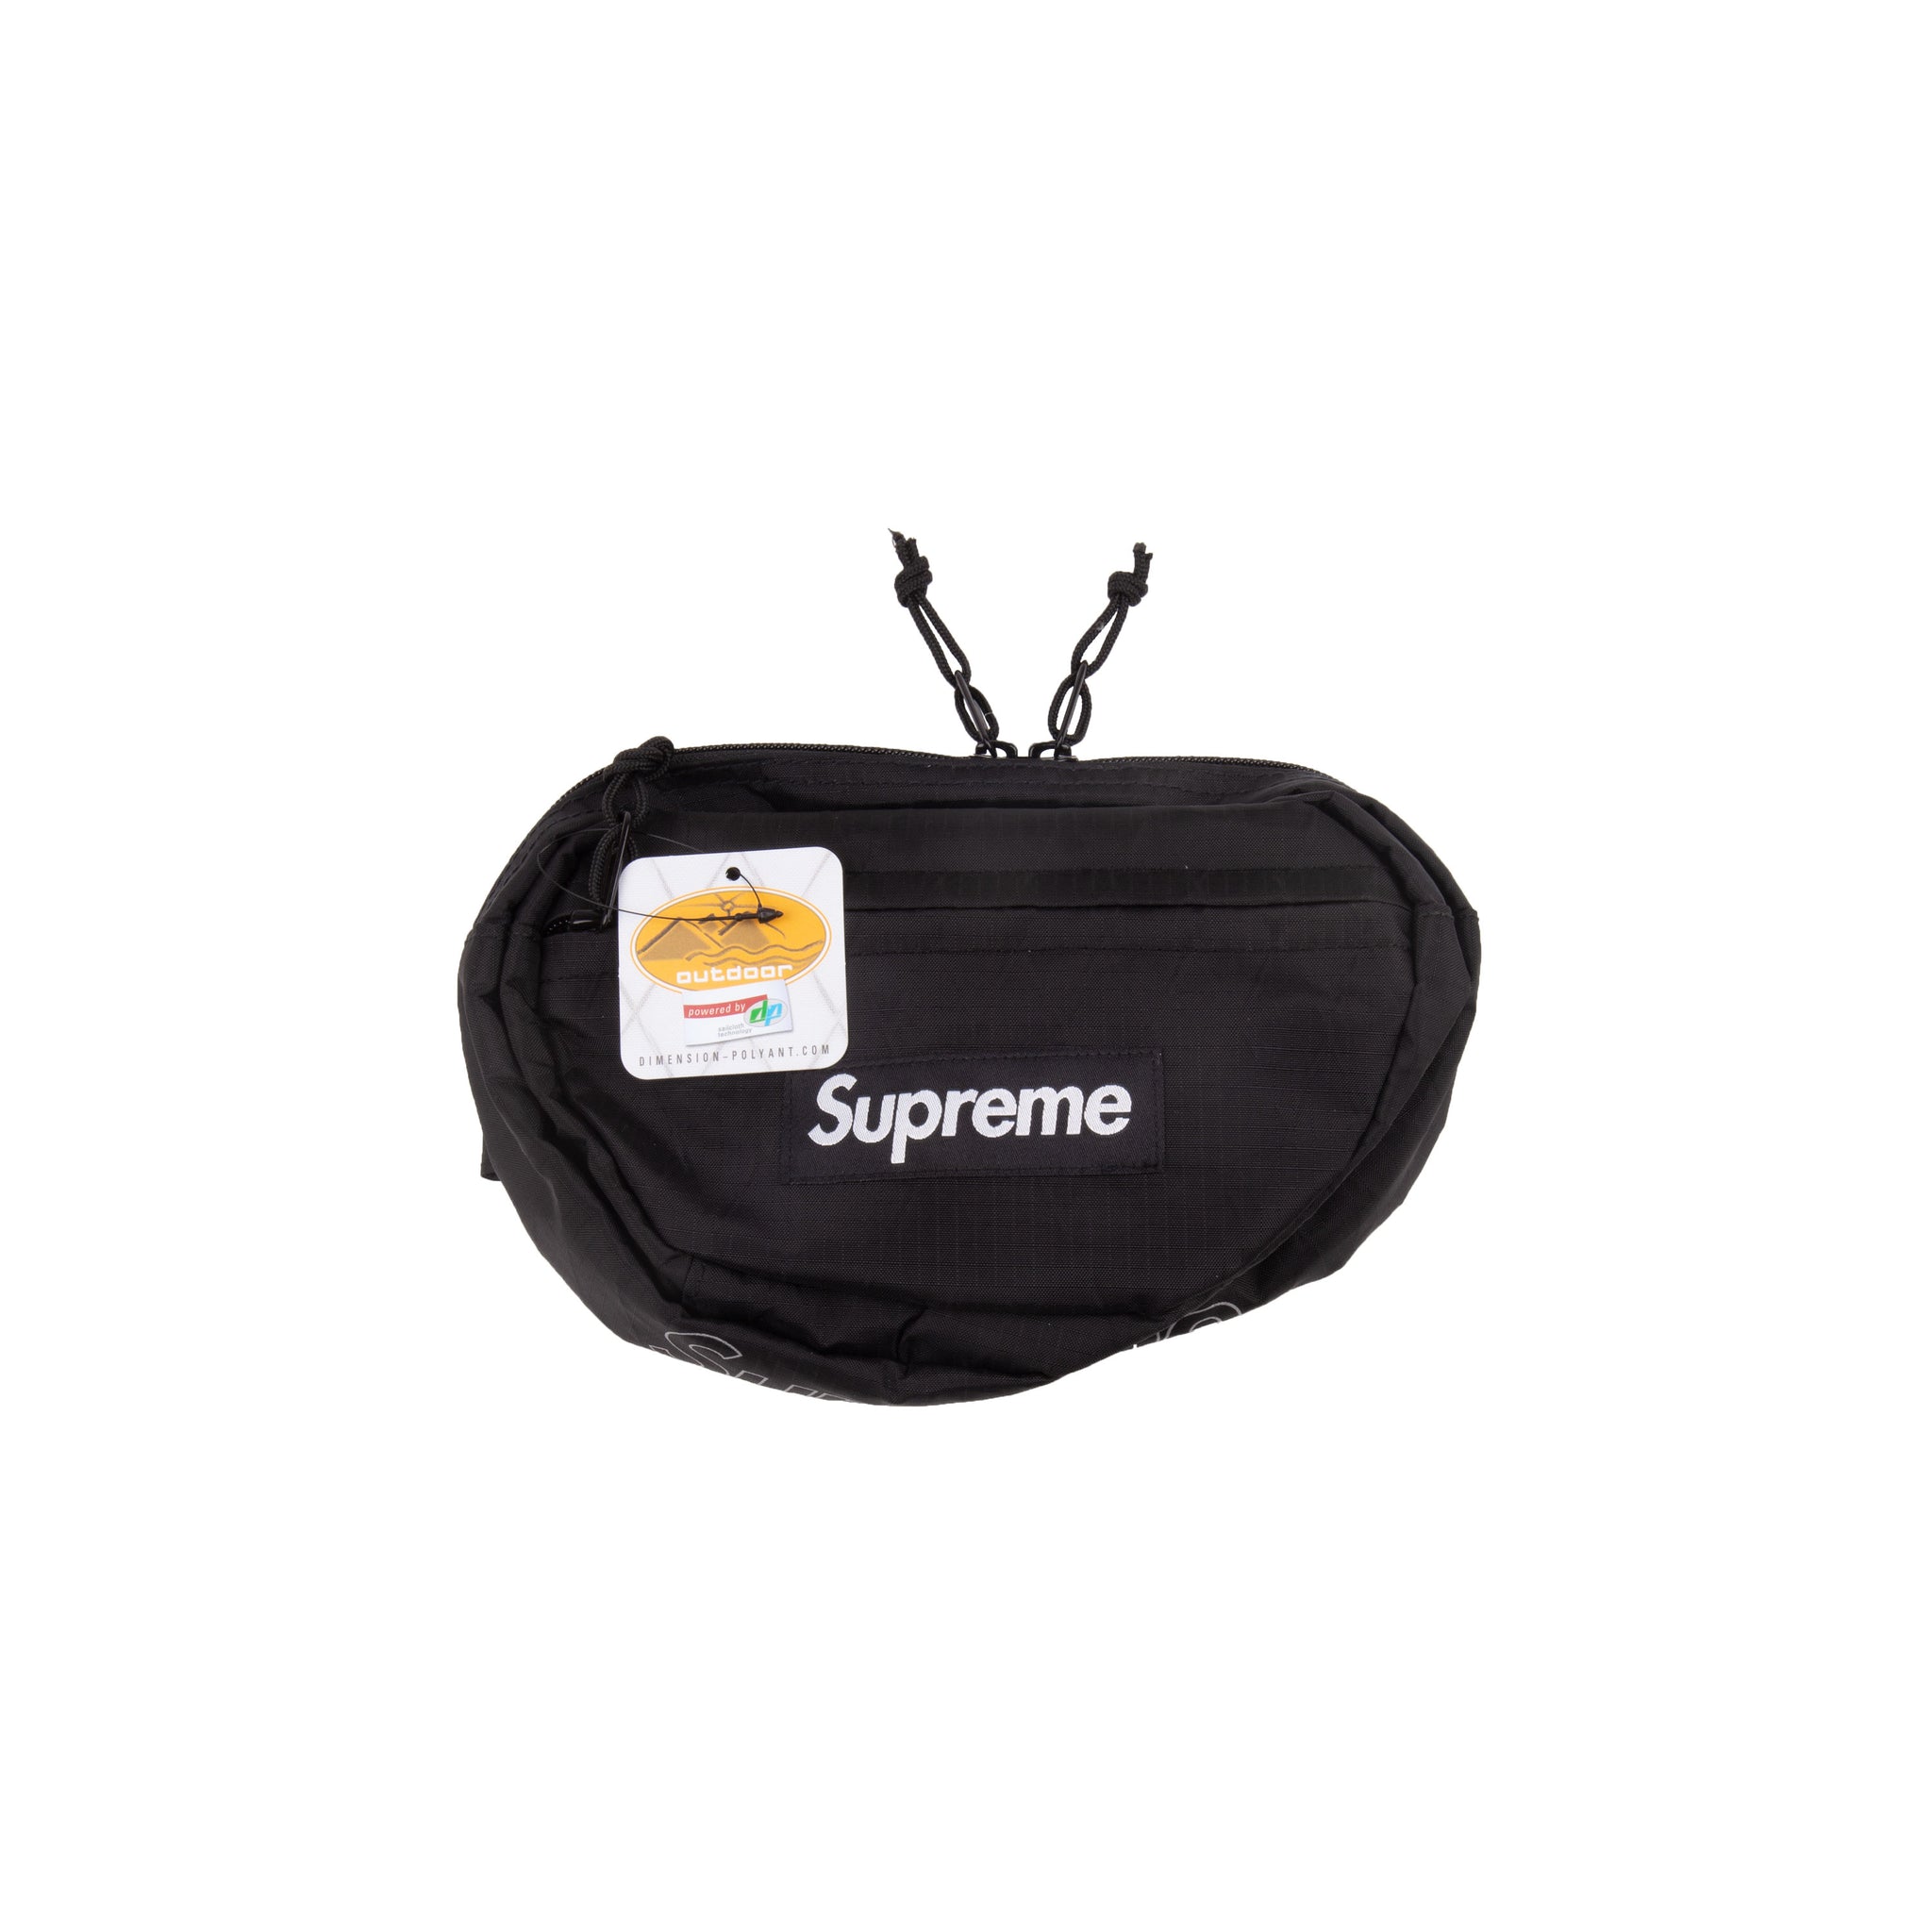 Lv Supreme Bum Bag Black